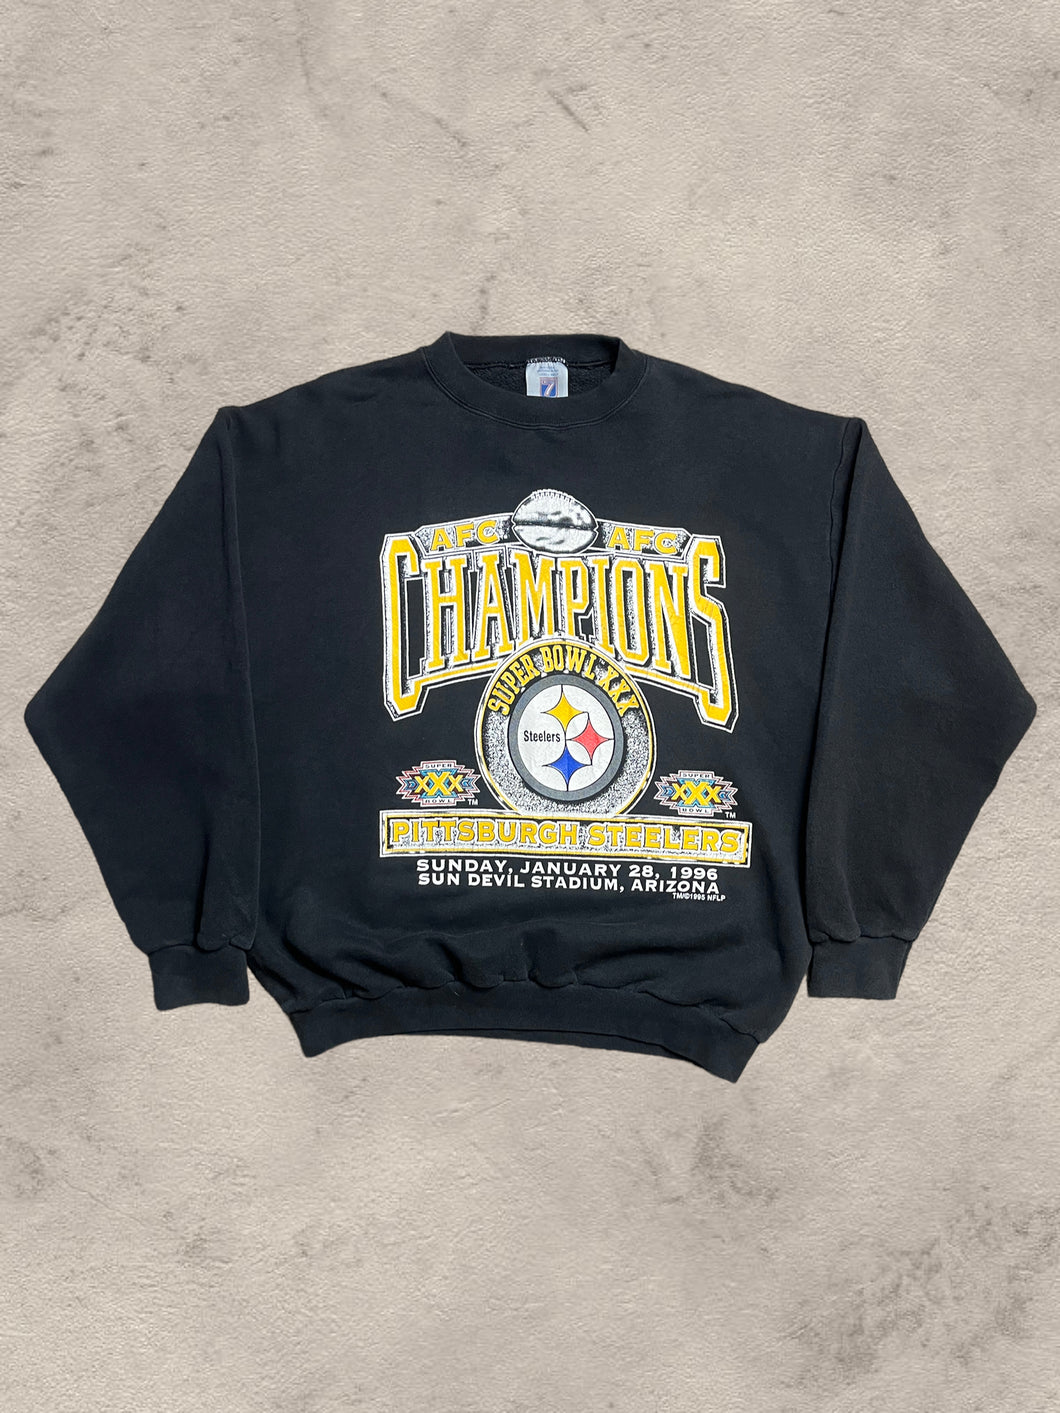 1996 Pittsburgh Steelers AFC Champions Sweatshirt - Large